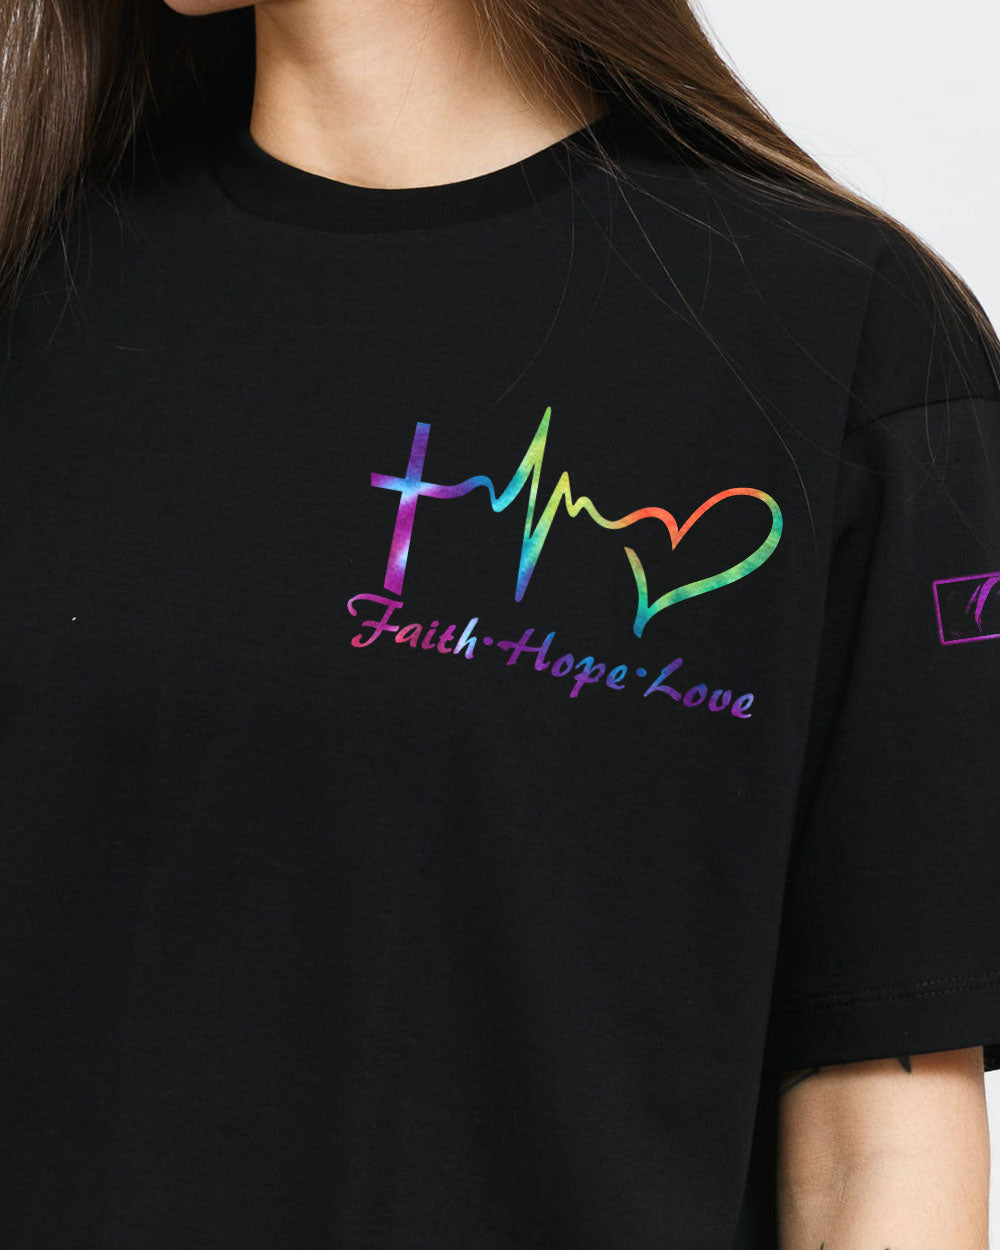 Fe Rose Colorful Women's Christian Tshirt